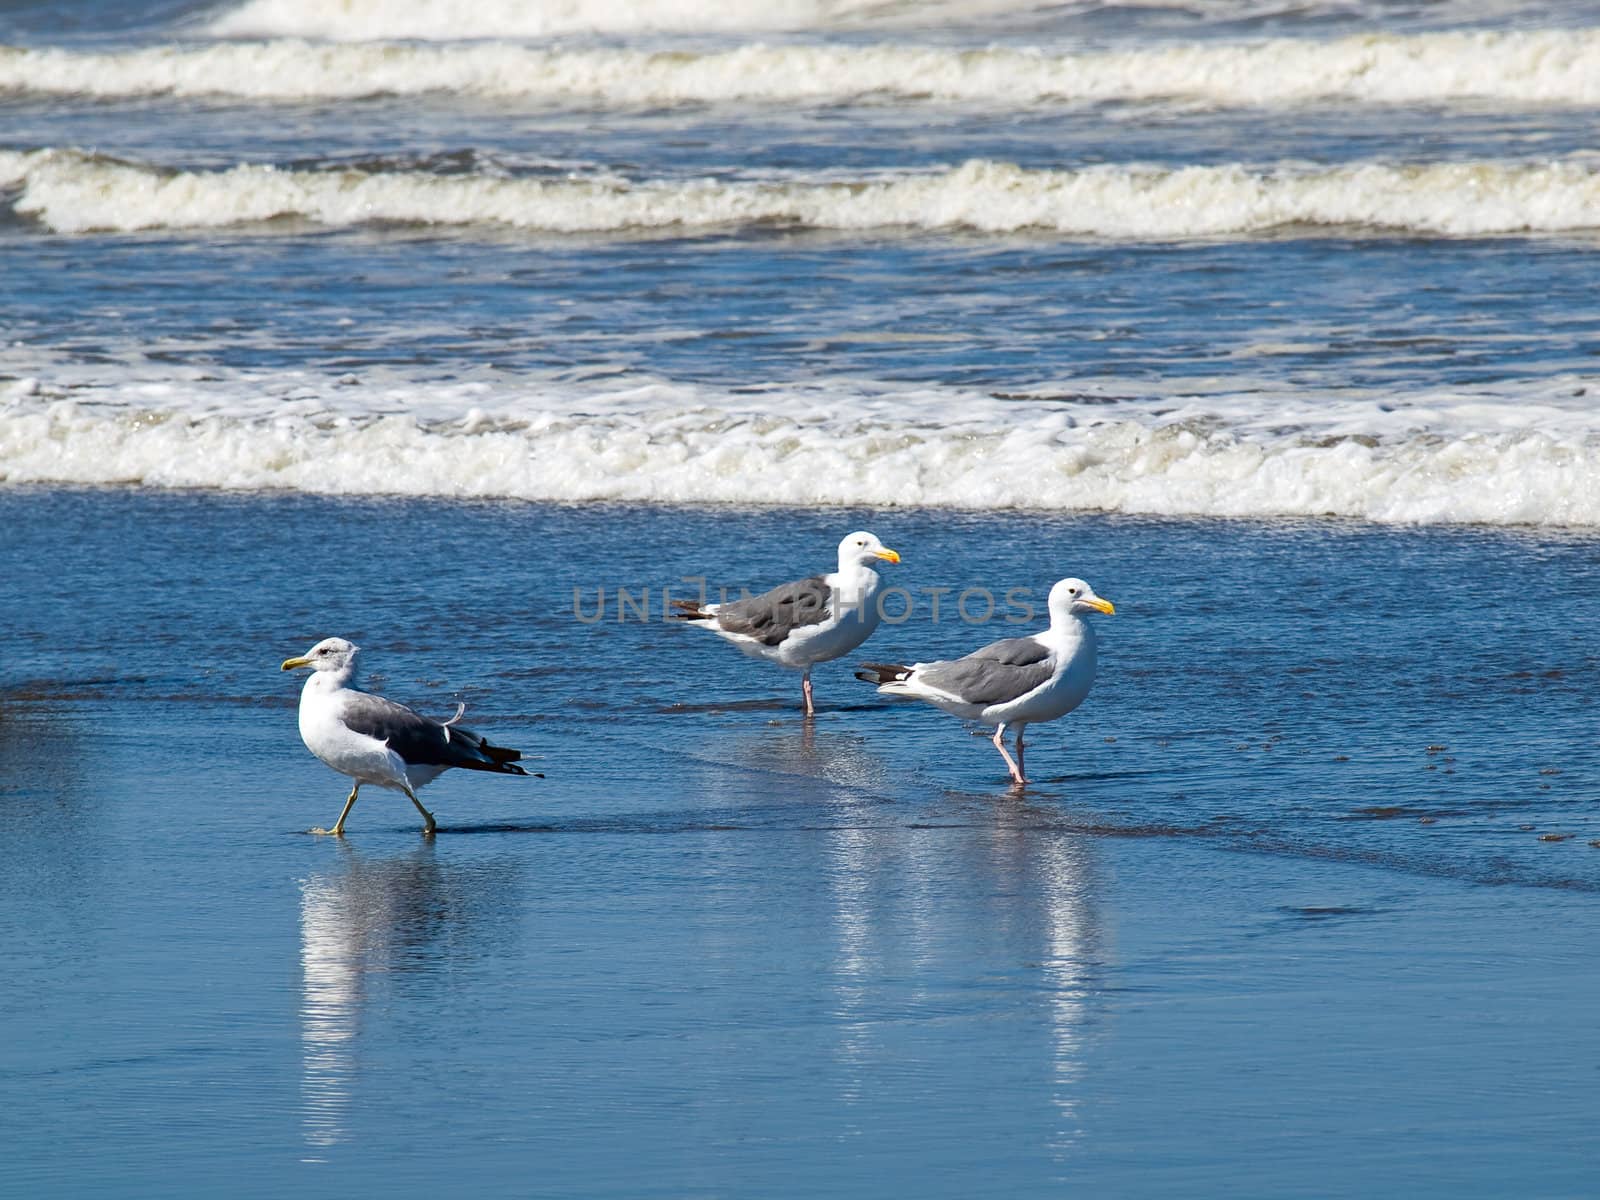 A Variety of Seabirds at the Seashore